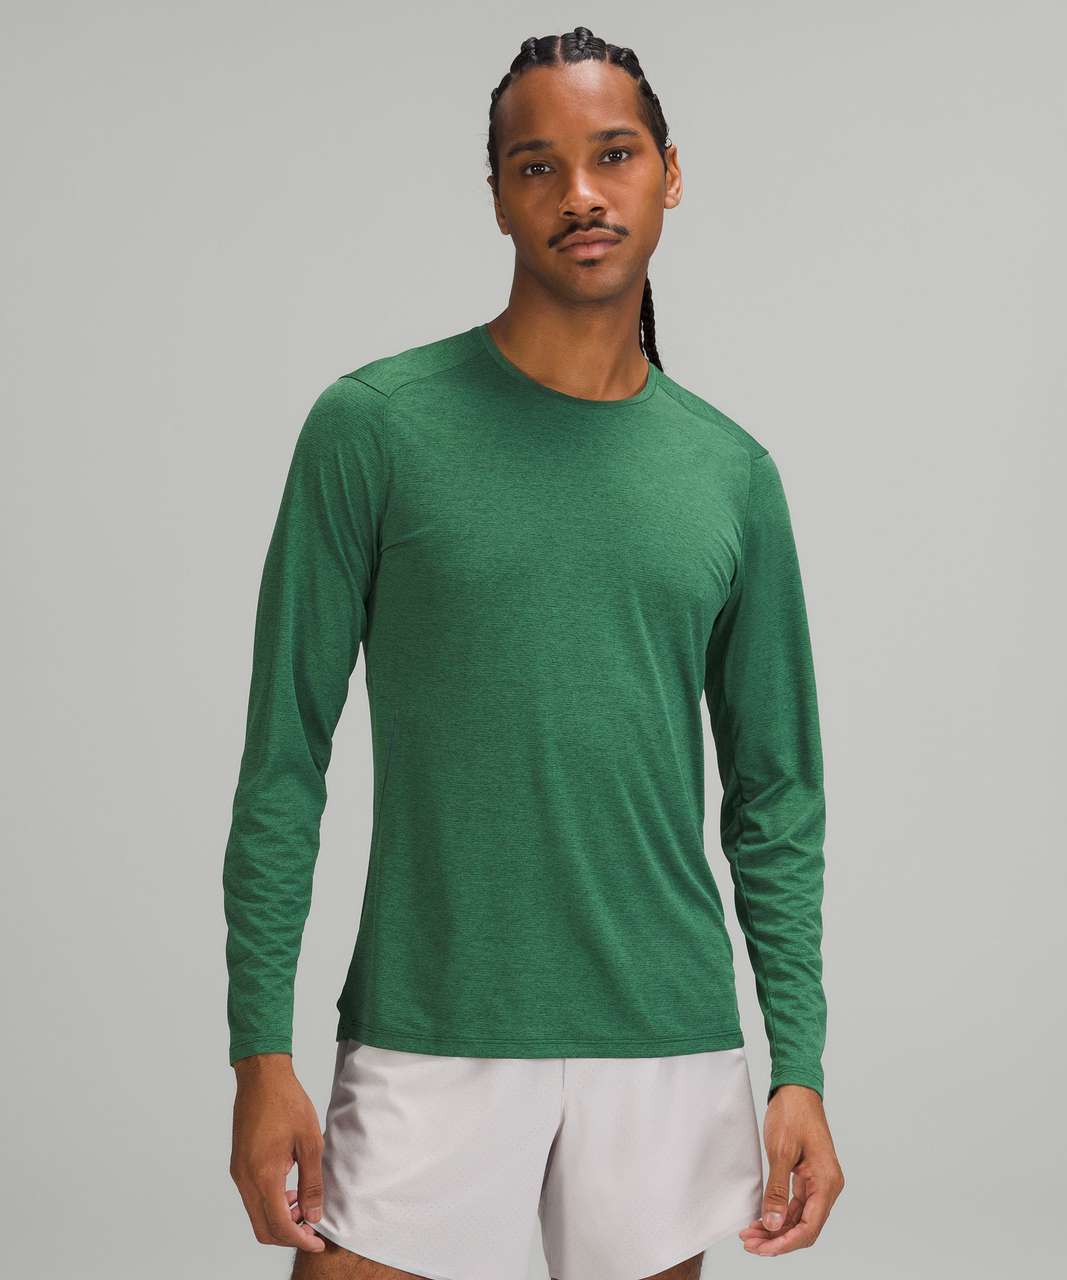 Lululemon Fast and Free Long Sleeve Shirt - Heathered Everglade Green